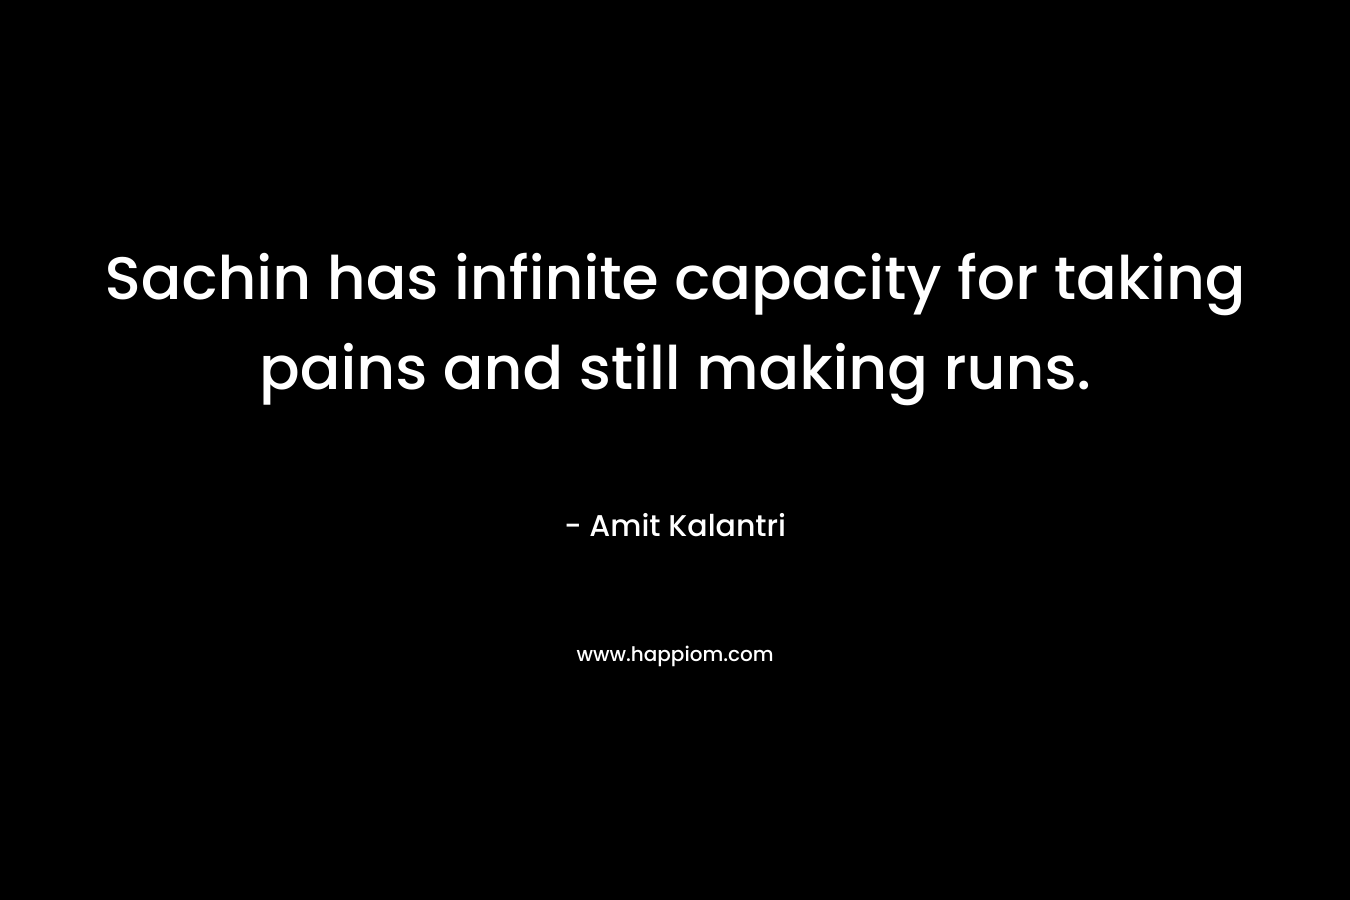 Sachin has infinite capacity for taking pains and still making runs. – Amit Kalantri